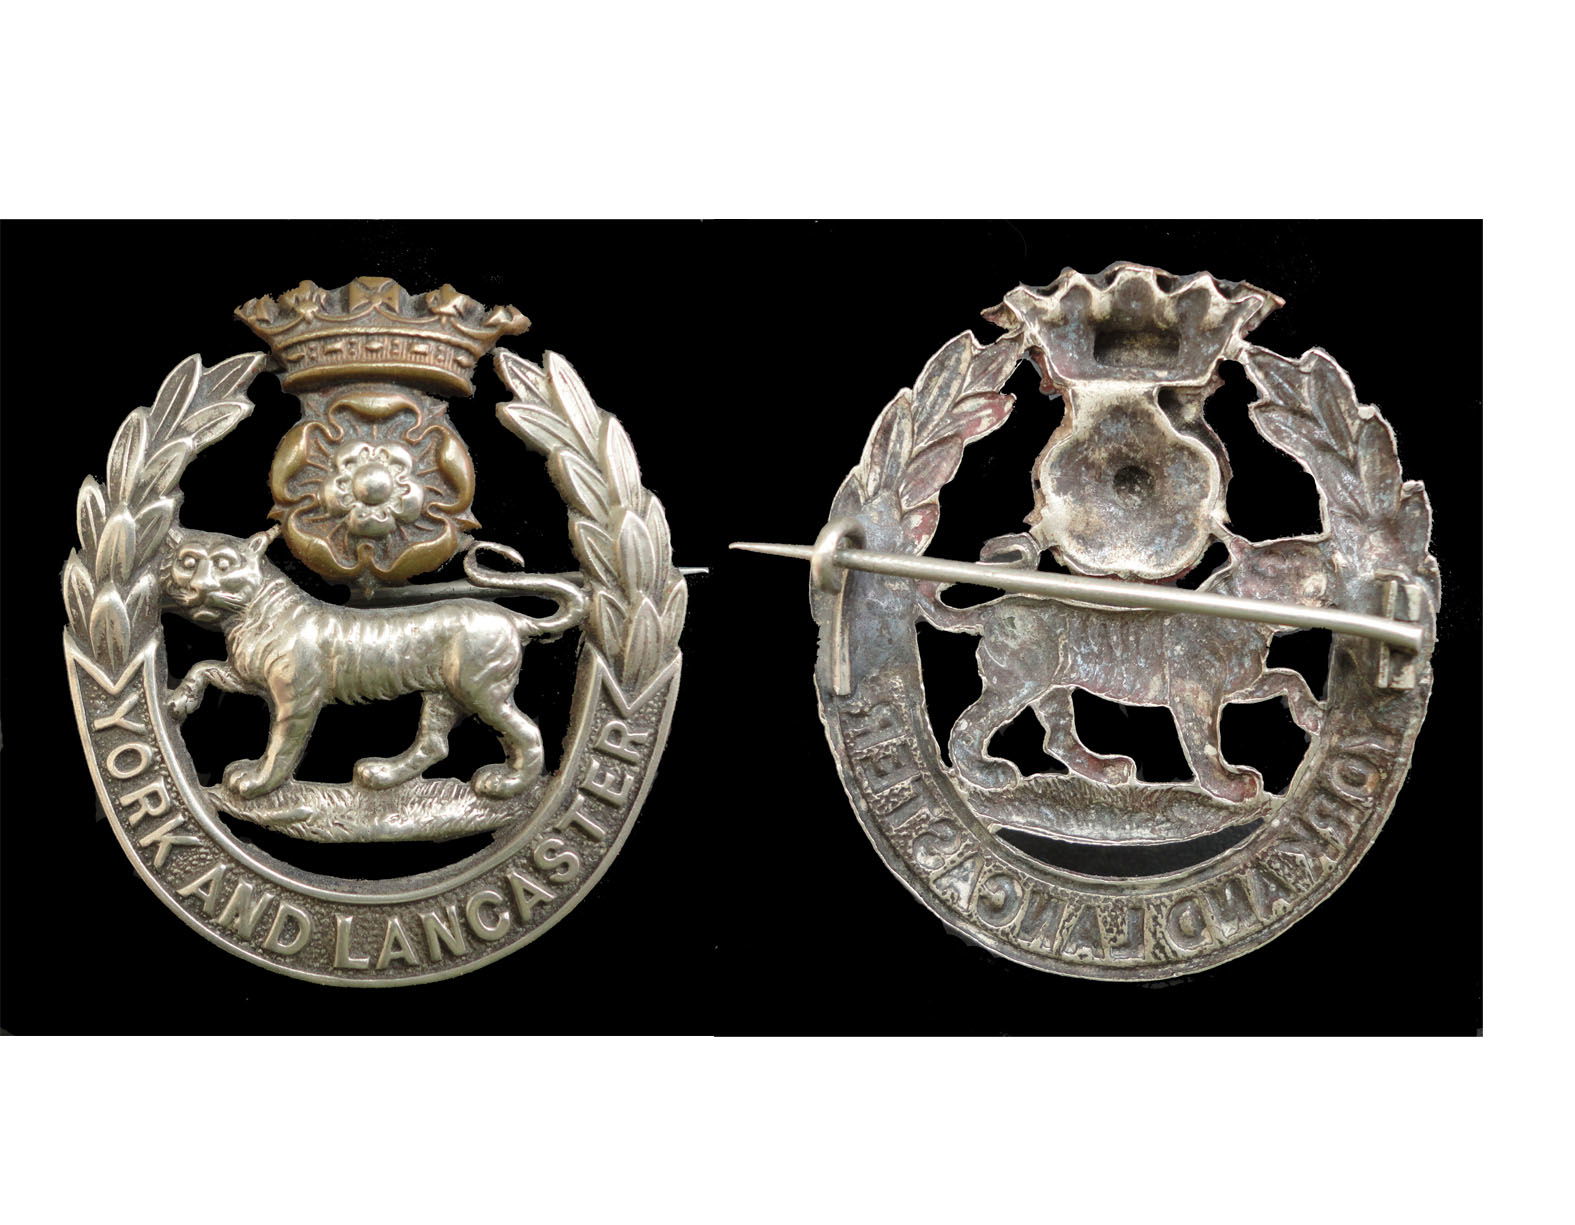 1st Volunteer (Hallamshire) Battalion Badge 1900 to 1902